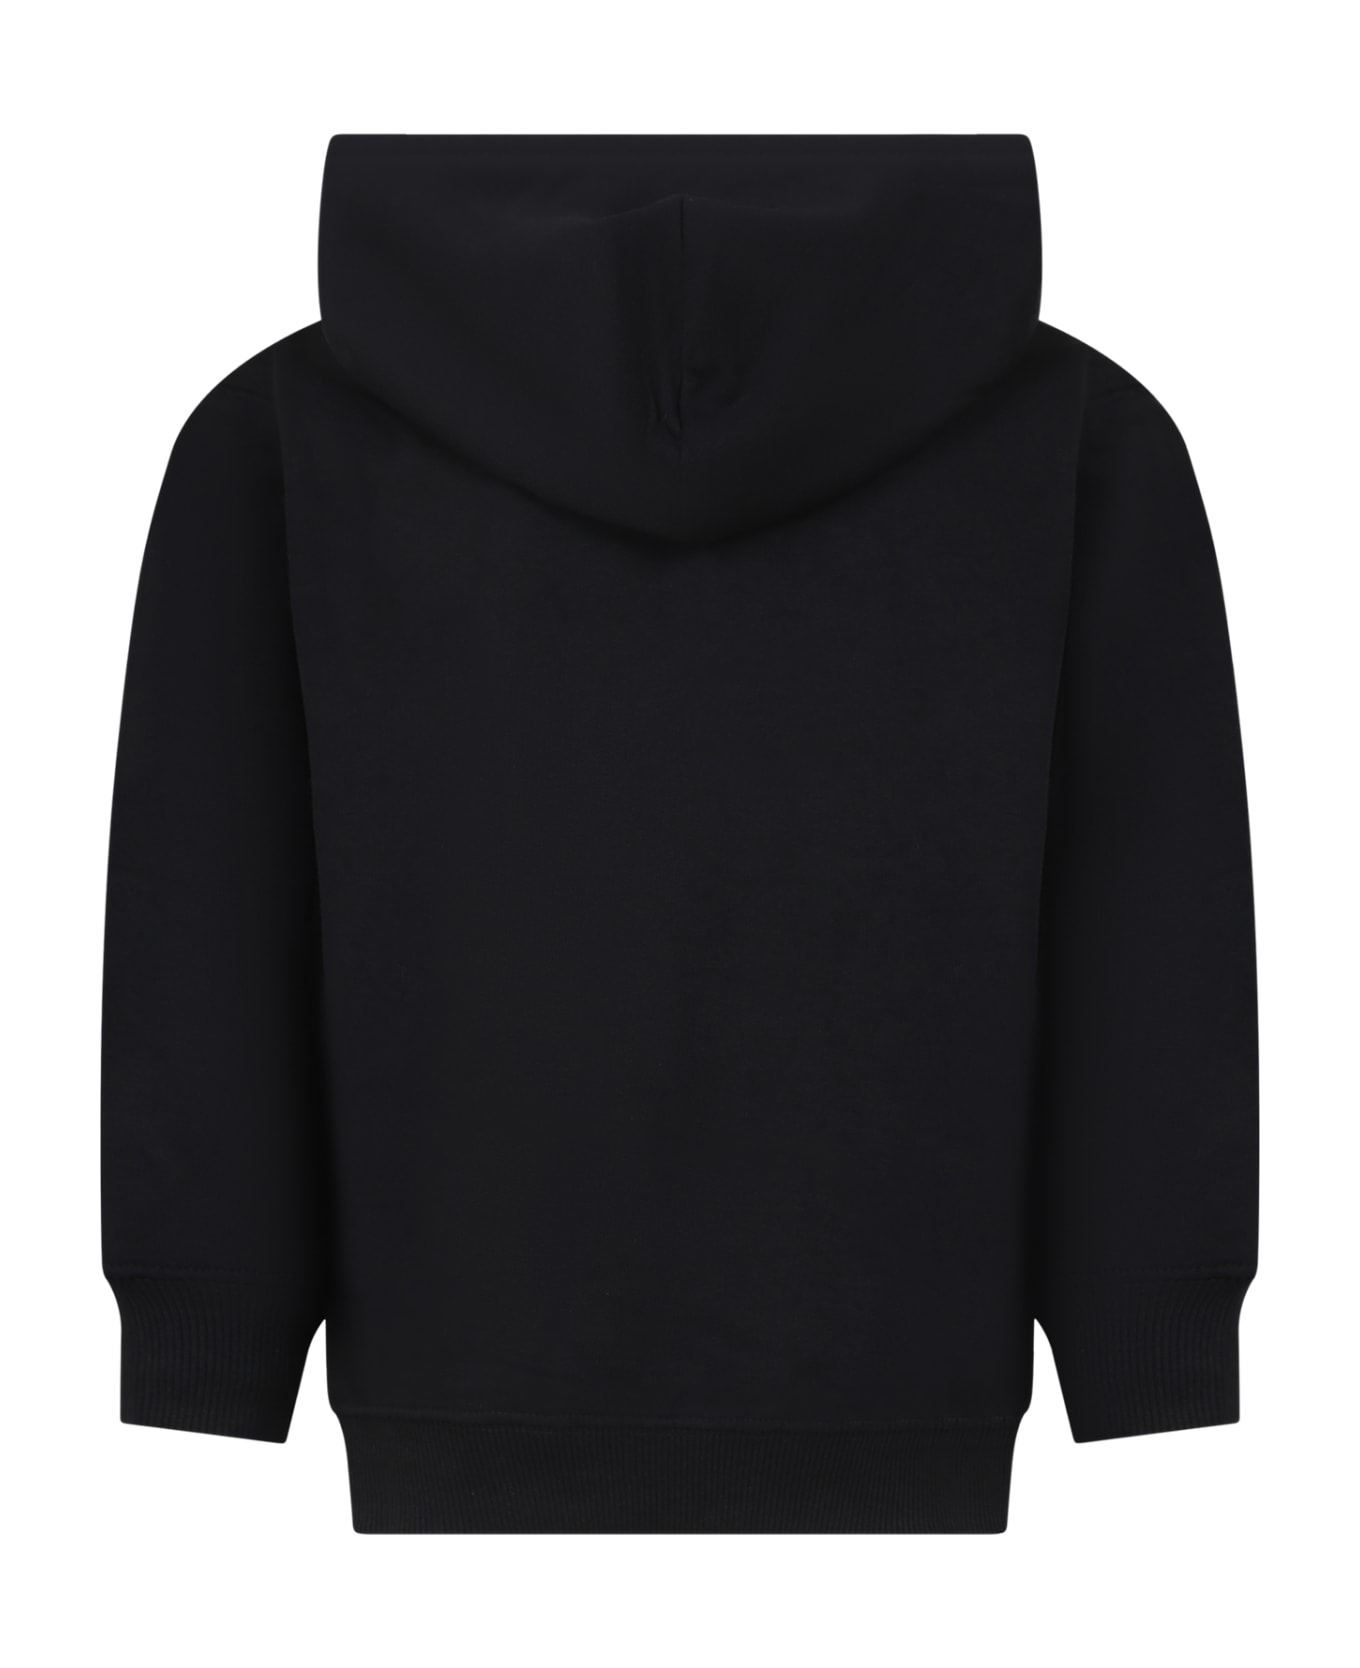 Molo Black Sweatshirt For Boy With Writing - Black